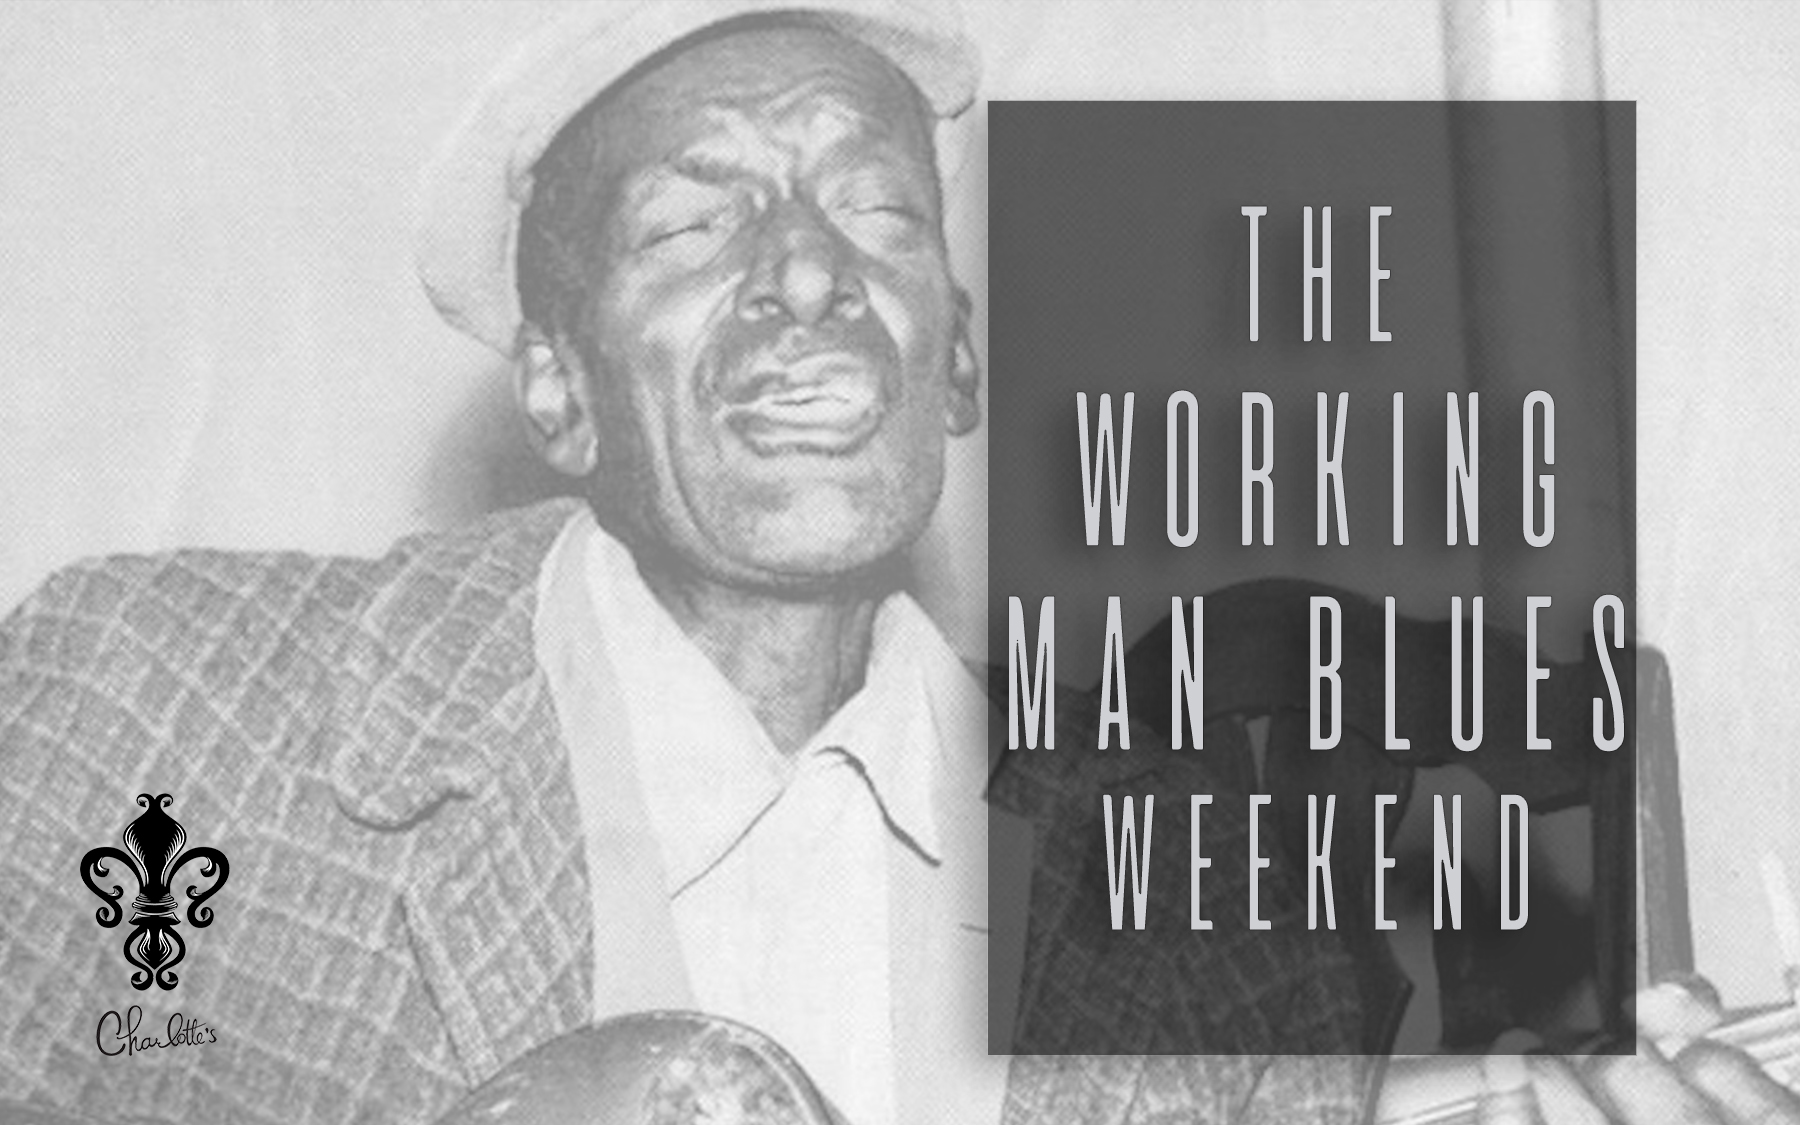 The Working Man Blues Weekend